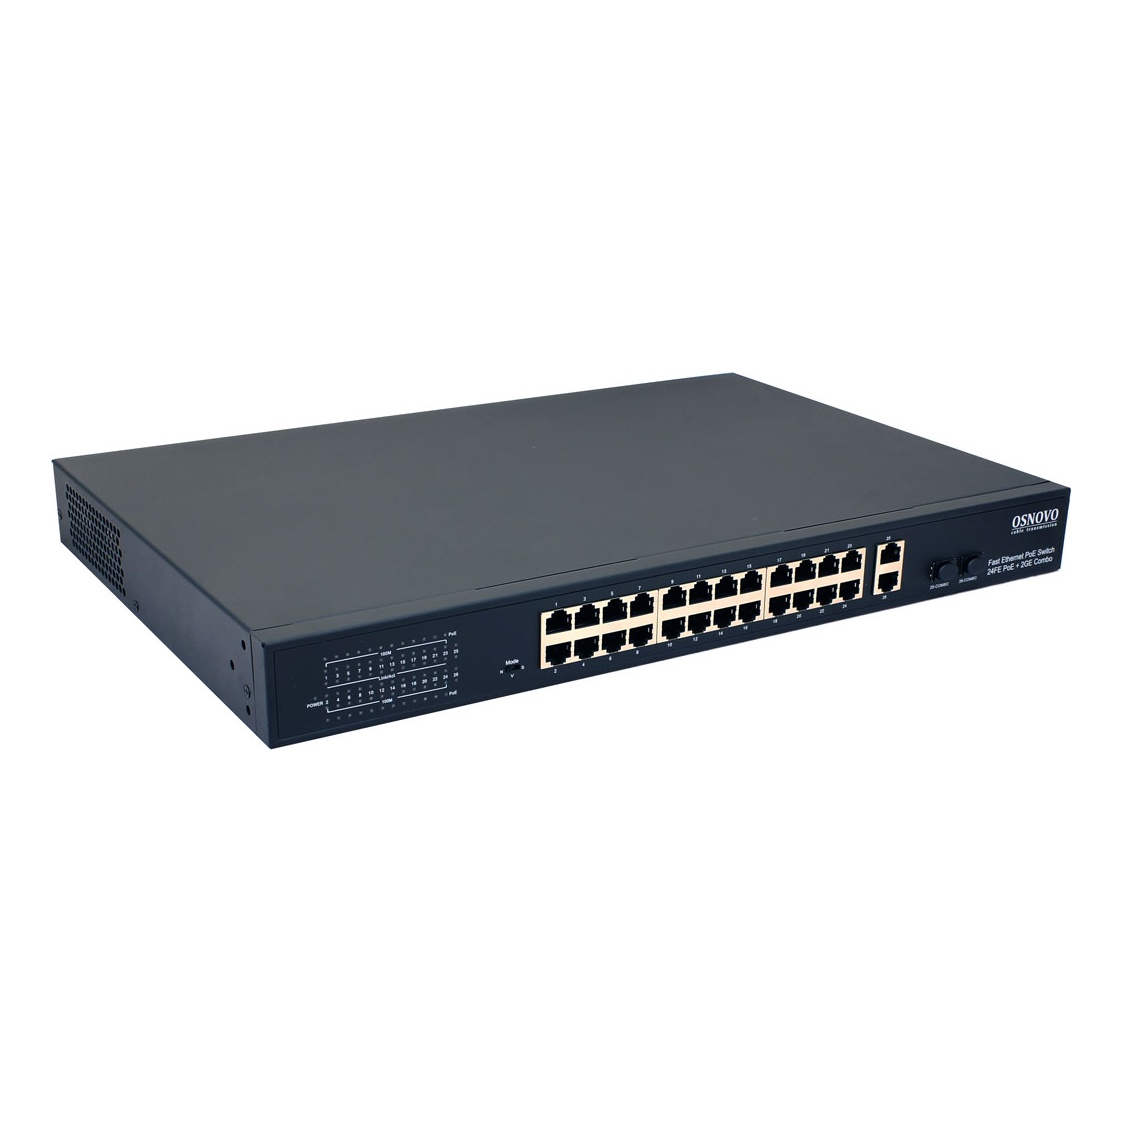 OSNOVO SW-62422(400W) SW-62422(400W) PoE коммутатор Fast Ethernet на 24 x RJ45 портов + 2 x GE Combo uplink порта